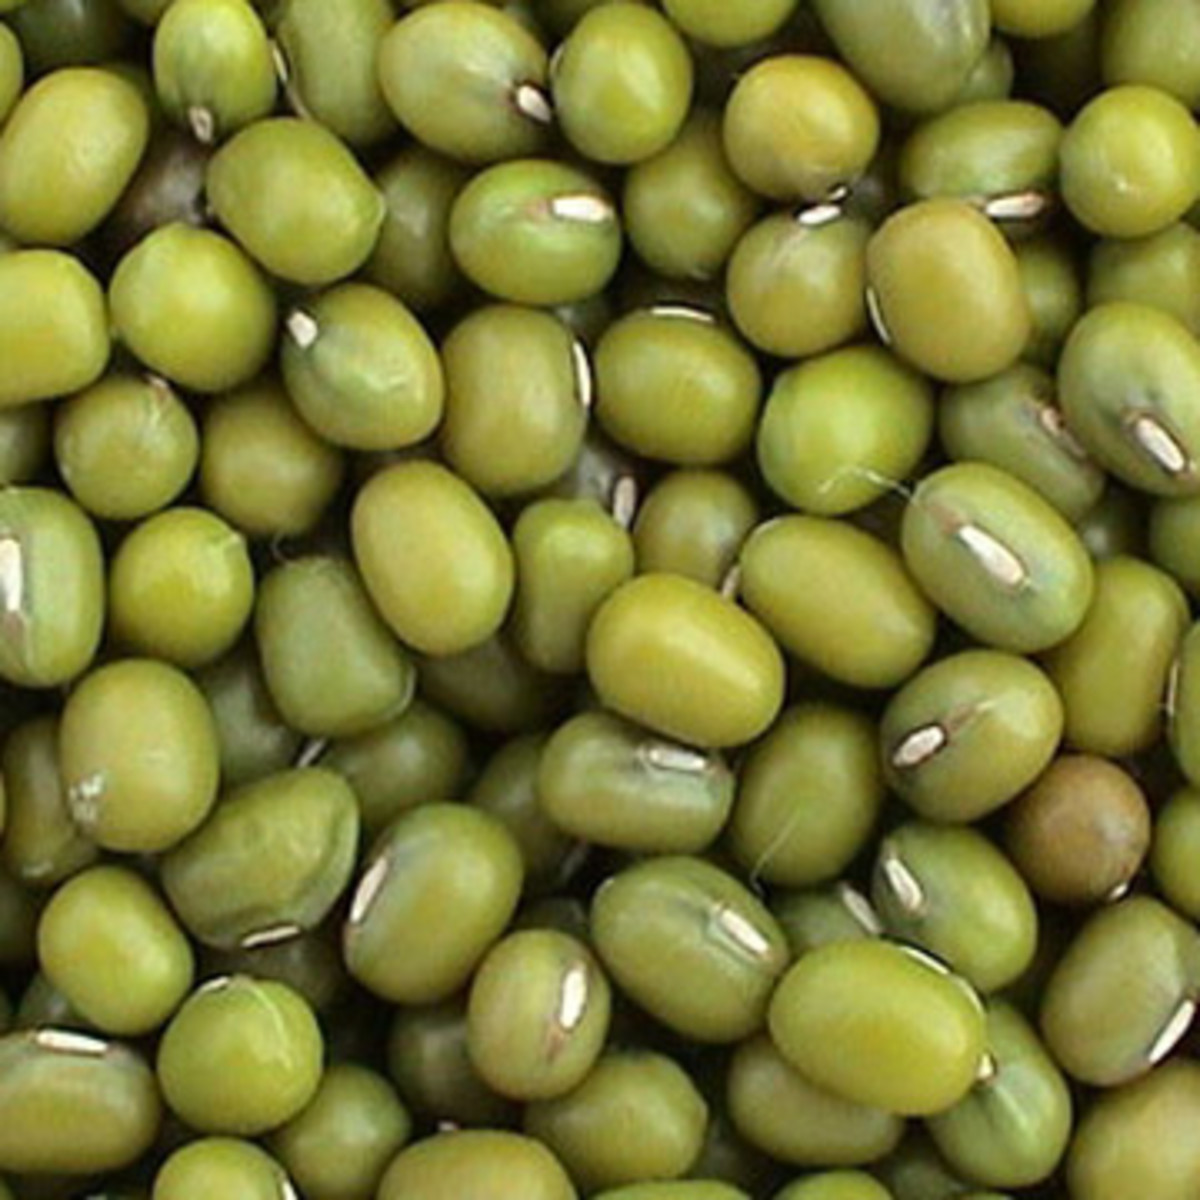 Green Mung Bean - also mungbean, mung, green or golden gram (Vigna radiata) Photo credits: hiwtc.com